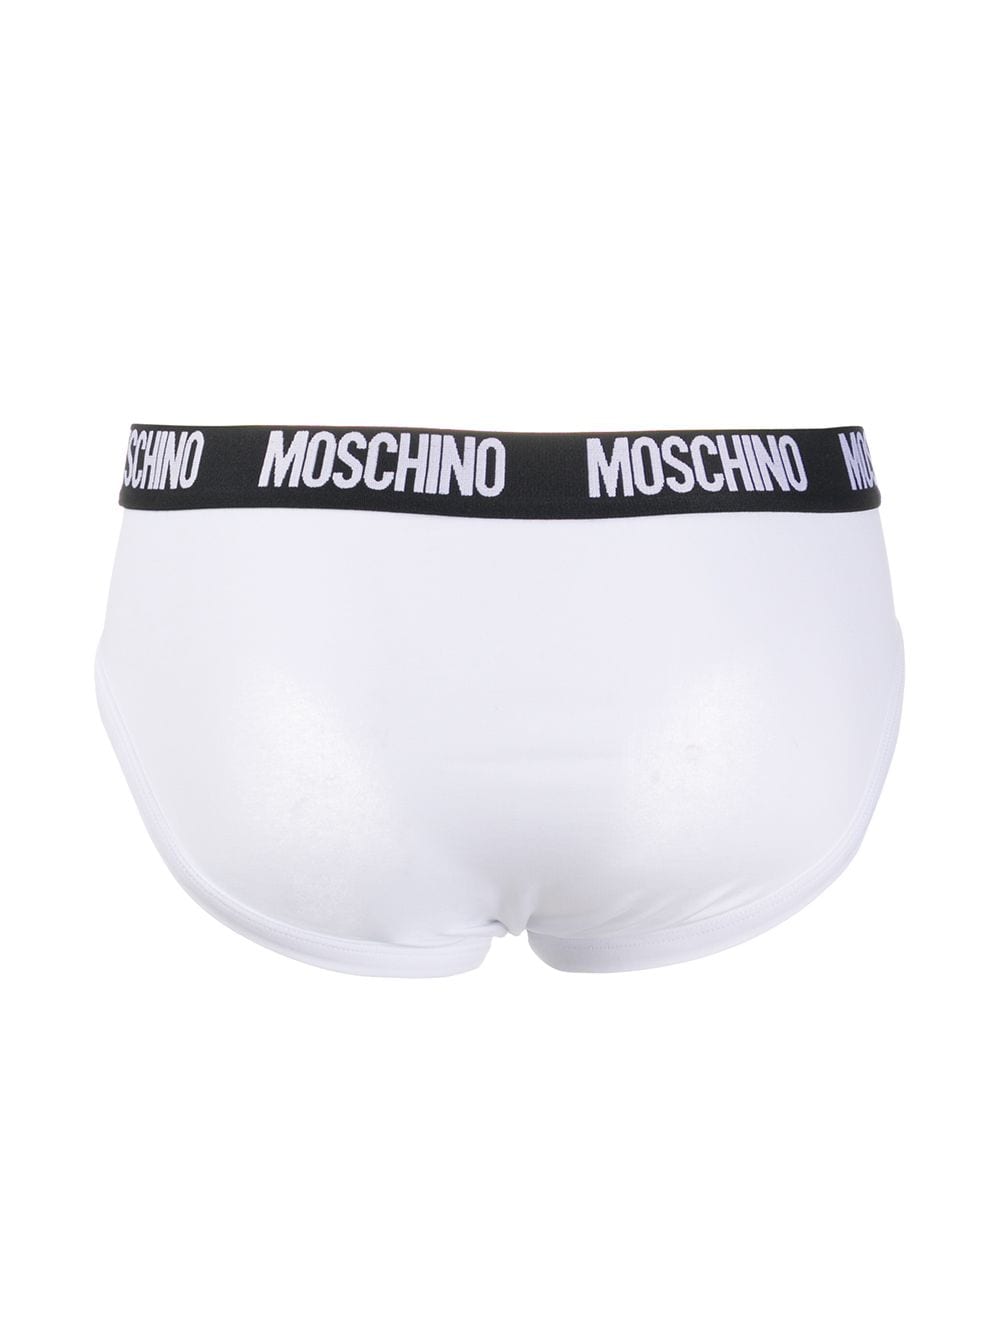 Image 2 of Moschino logo waistband briefs